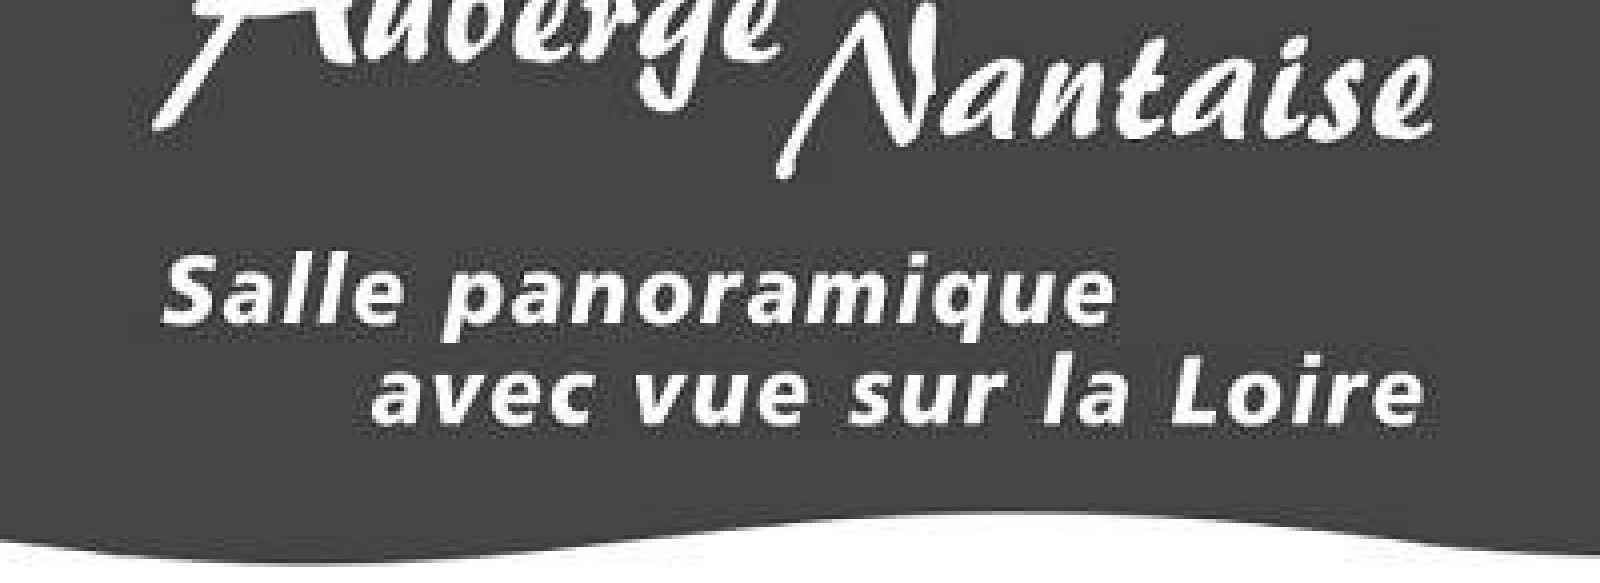 RESTAURANT L'AUBERGE NANTAISE